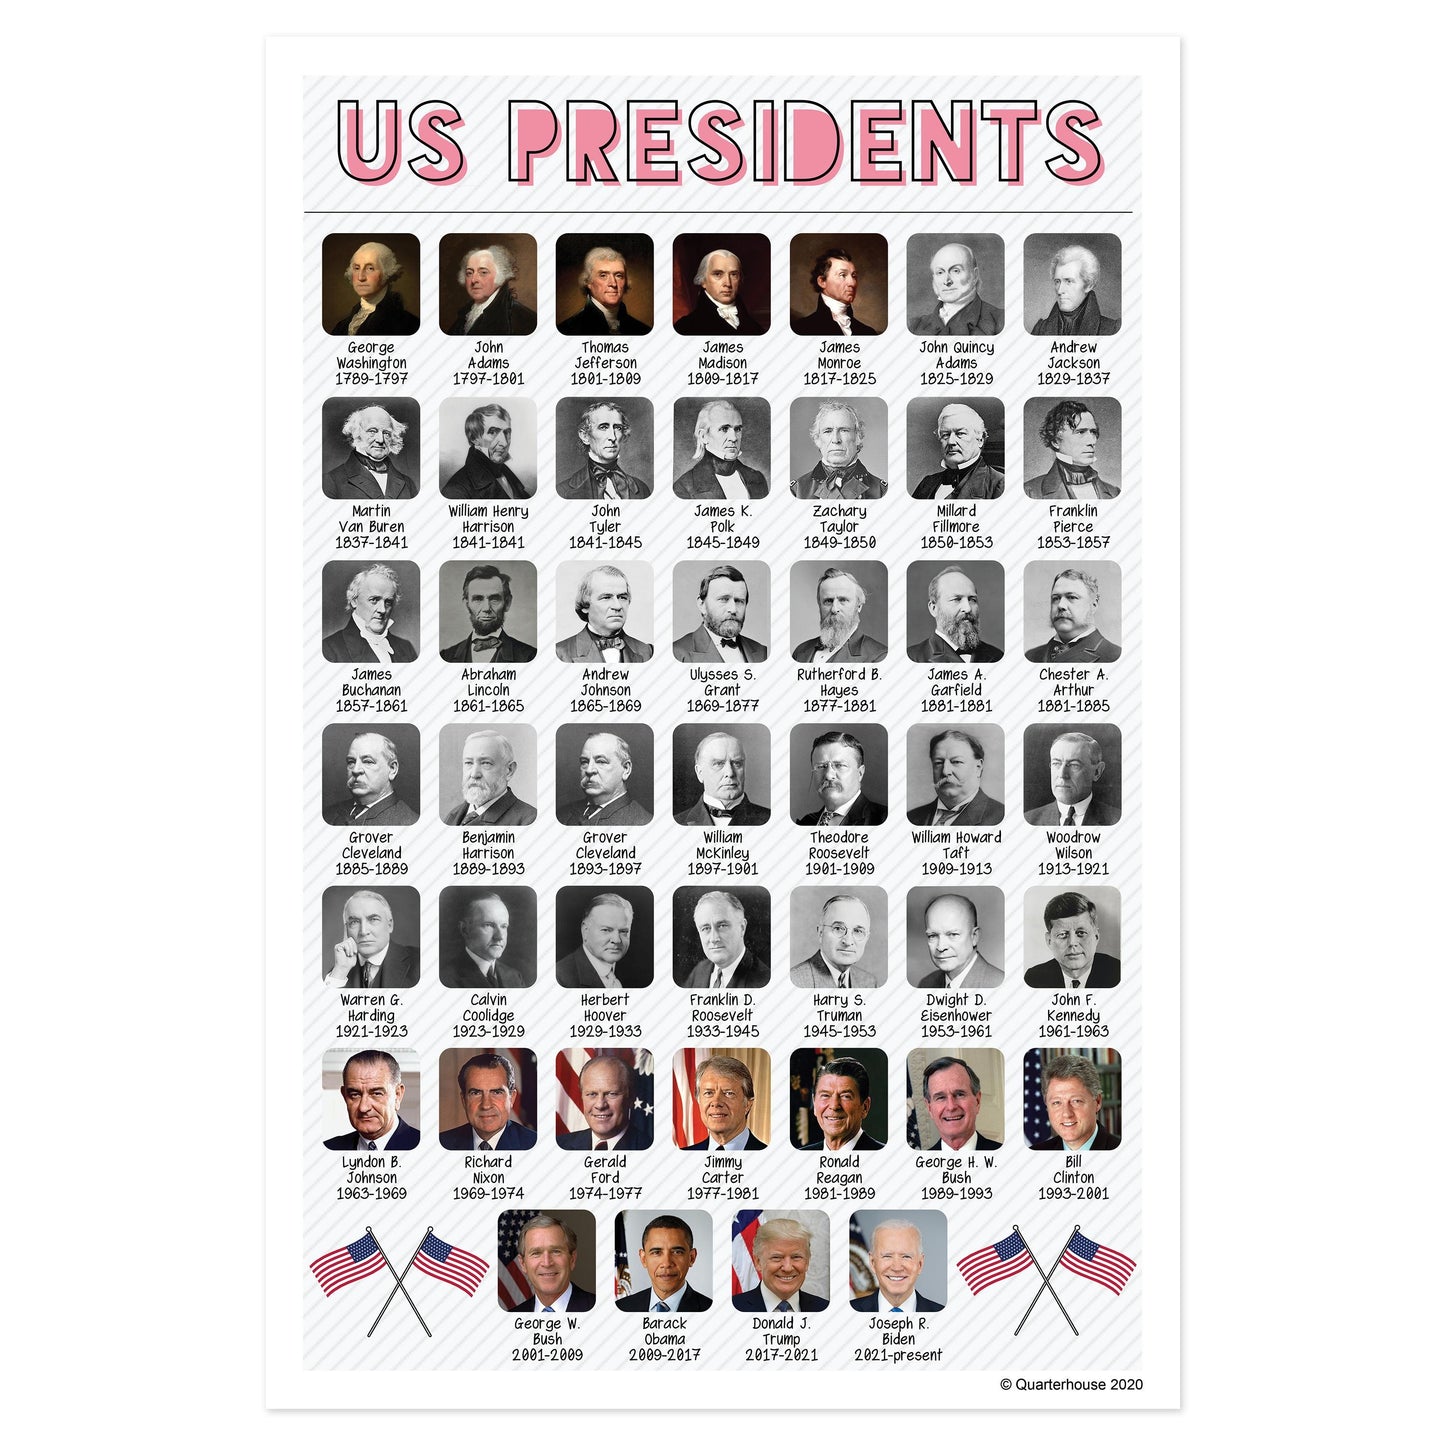 Quarterhouse Illustrated US Presidents Poster, Social Studies Classroom Materials for Teachers